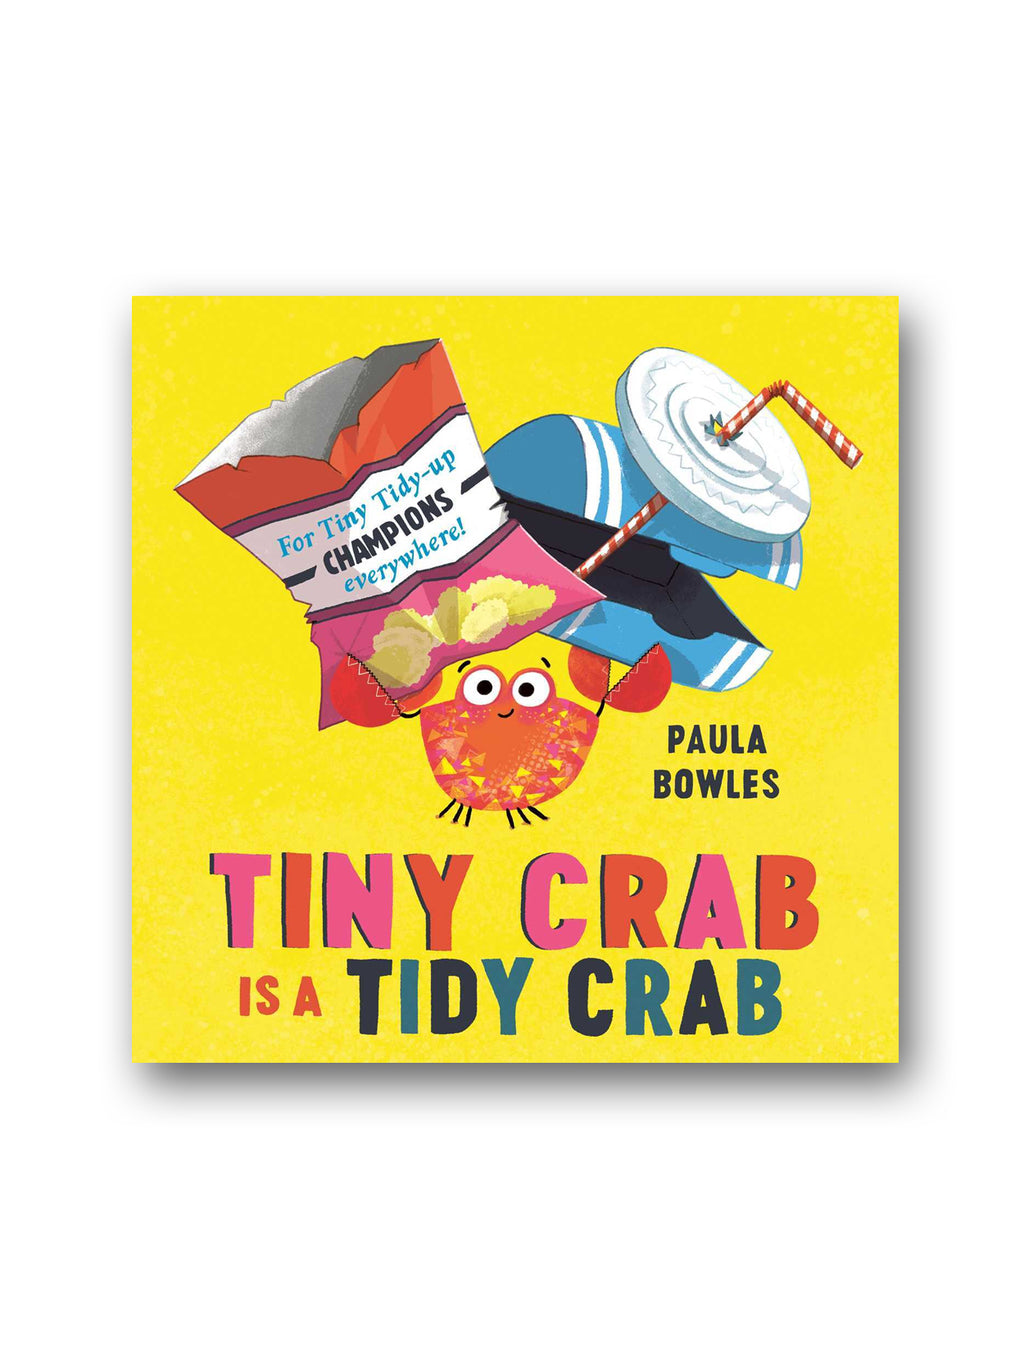 Tiny Crab is a Tidy Crab